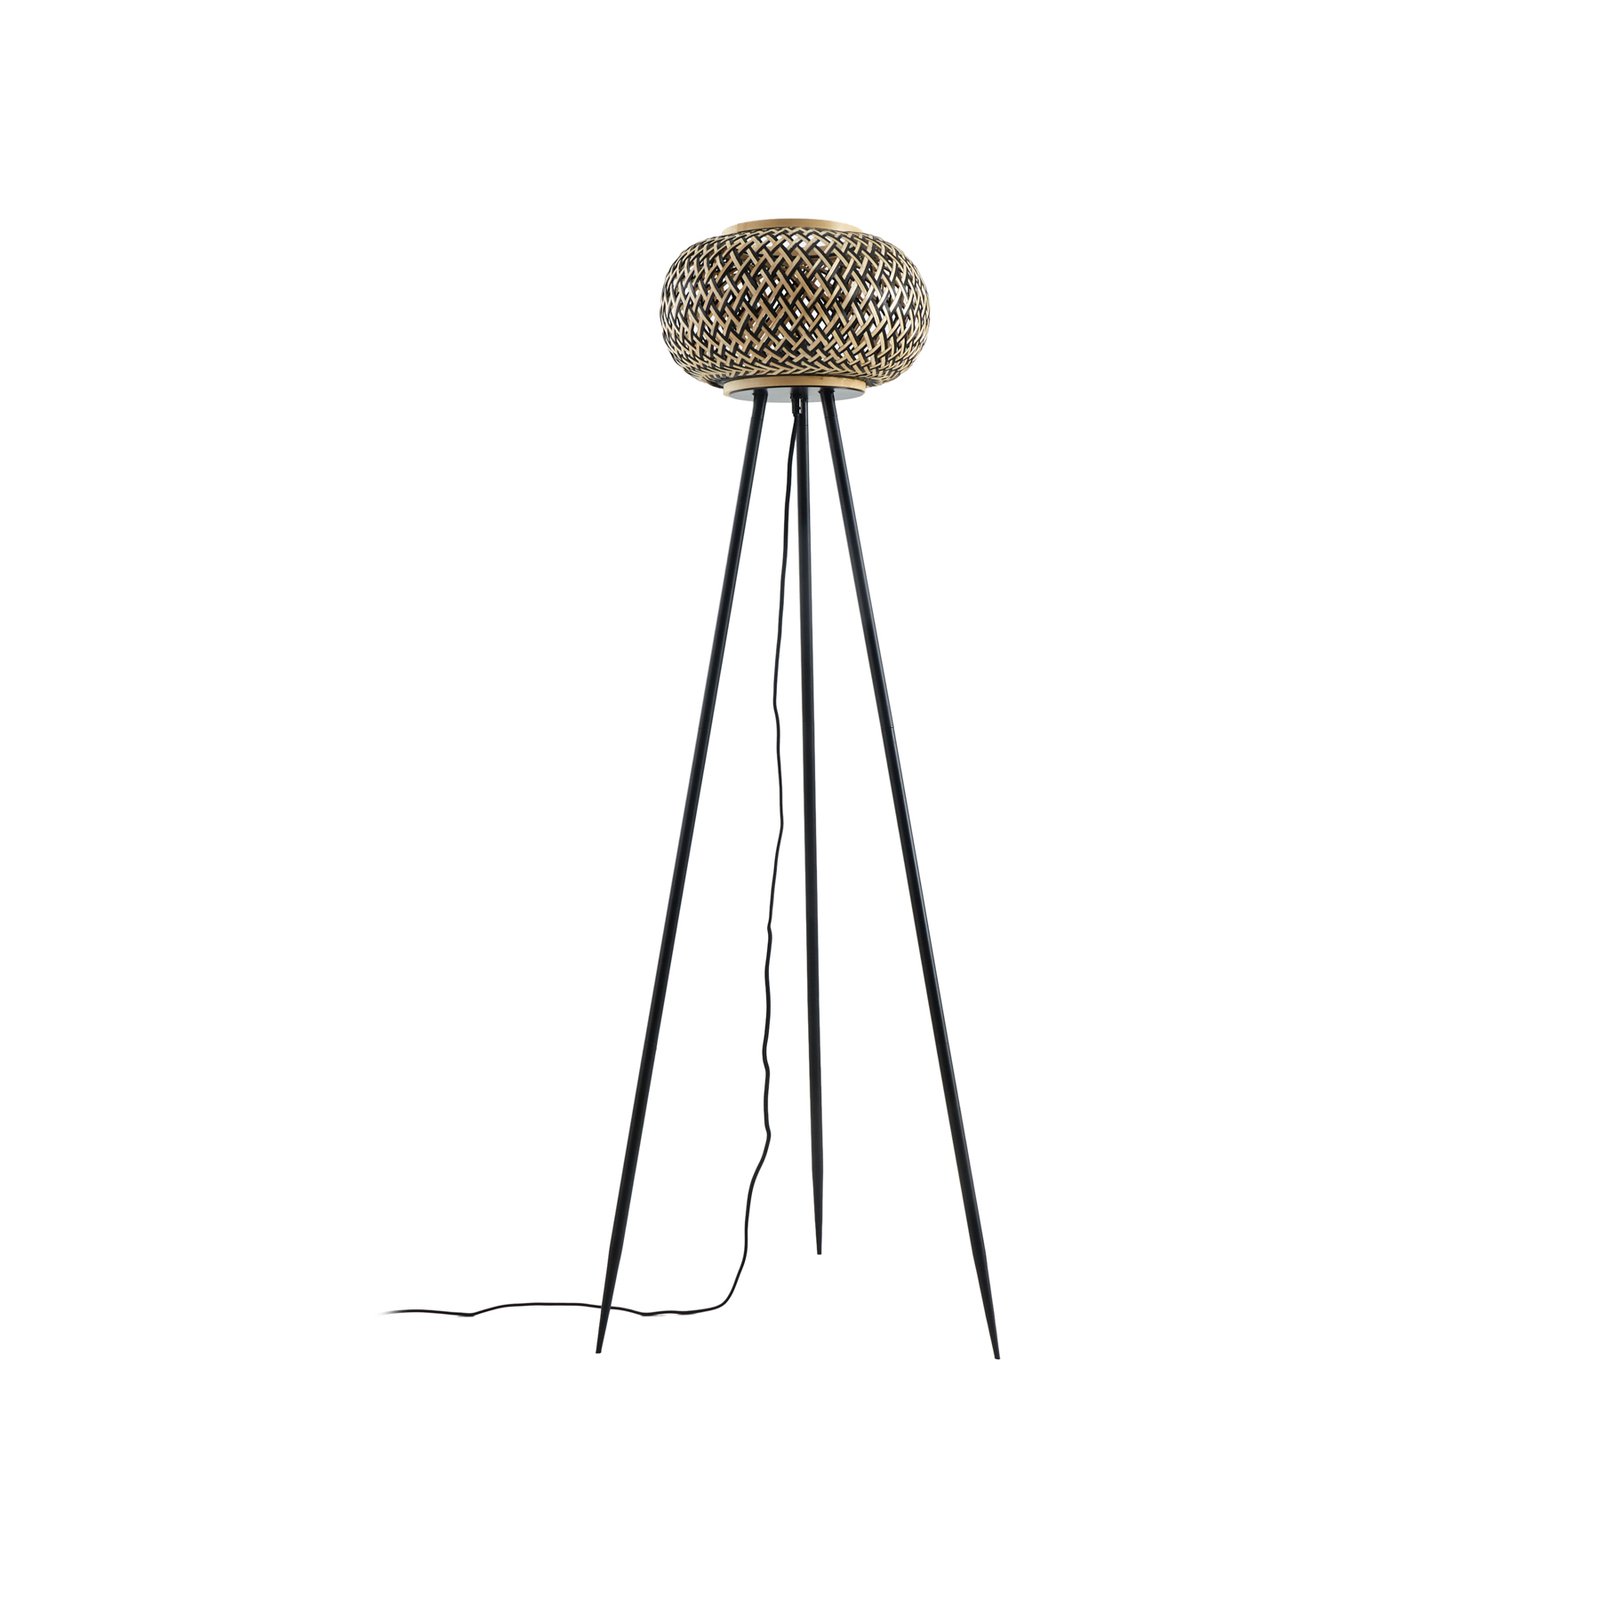 Lindby floor lamp Nerys, black, bamboo, Ø 31.5 cm, tripod